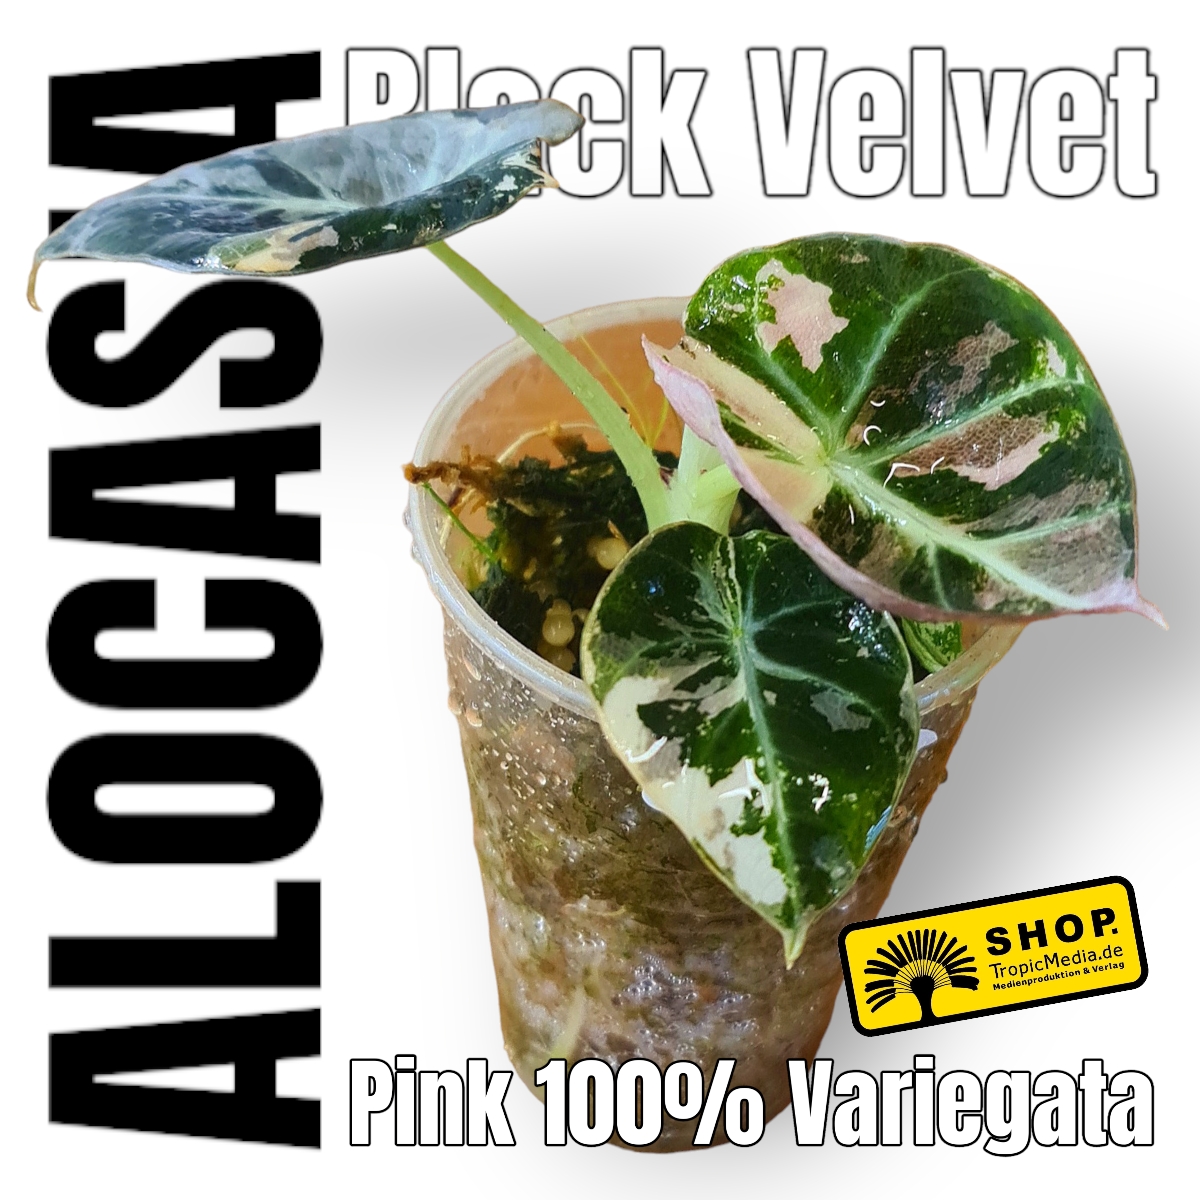  Alocasia Black Velvet Pink 100% Variegata